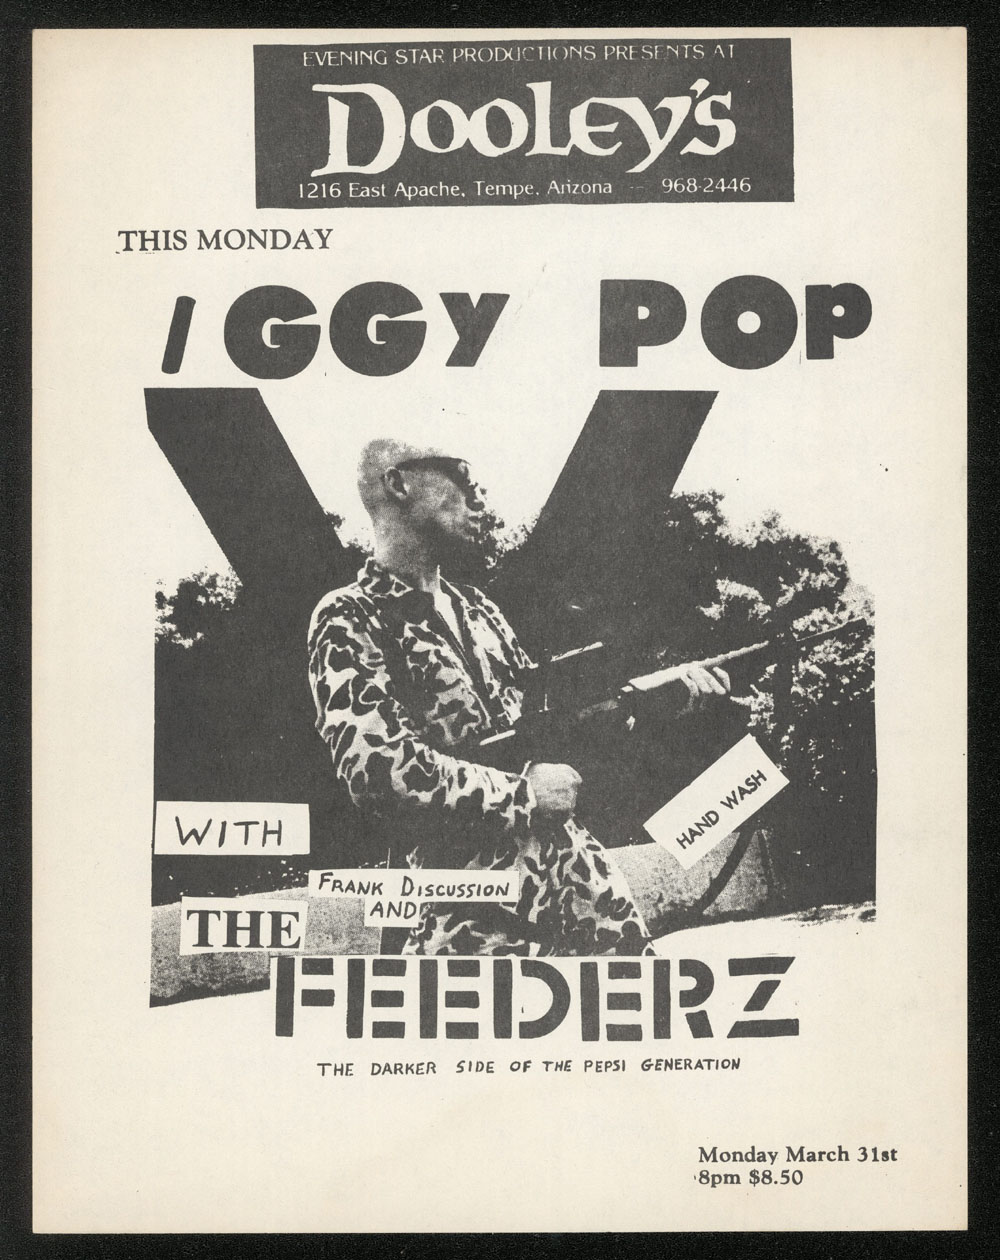 IGGY POP w/ Feederz at Dooley's